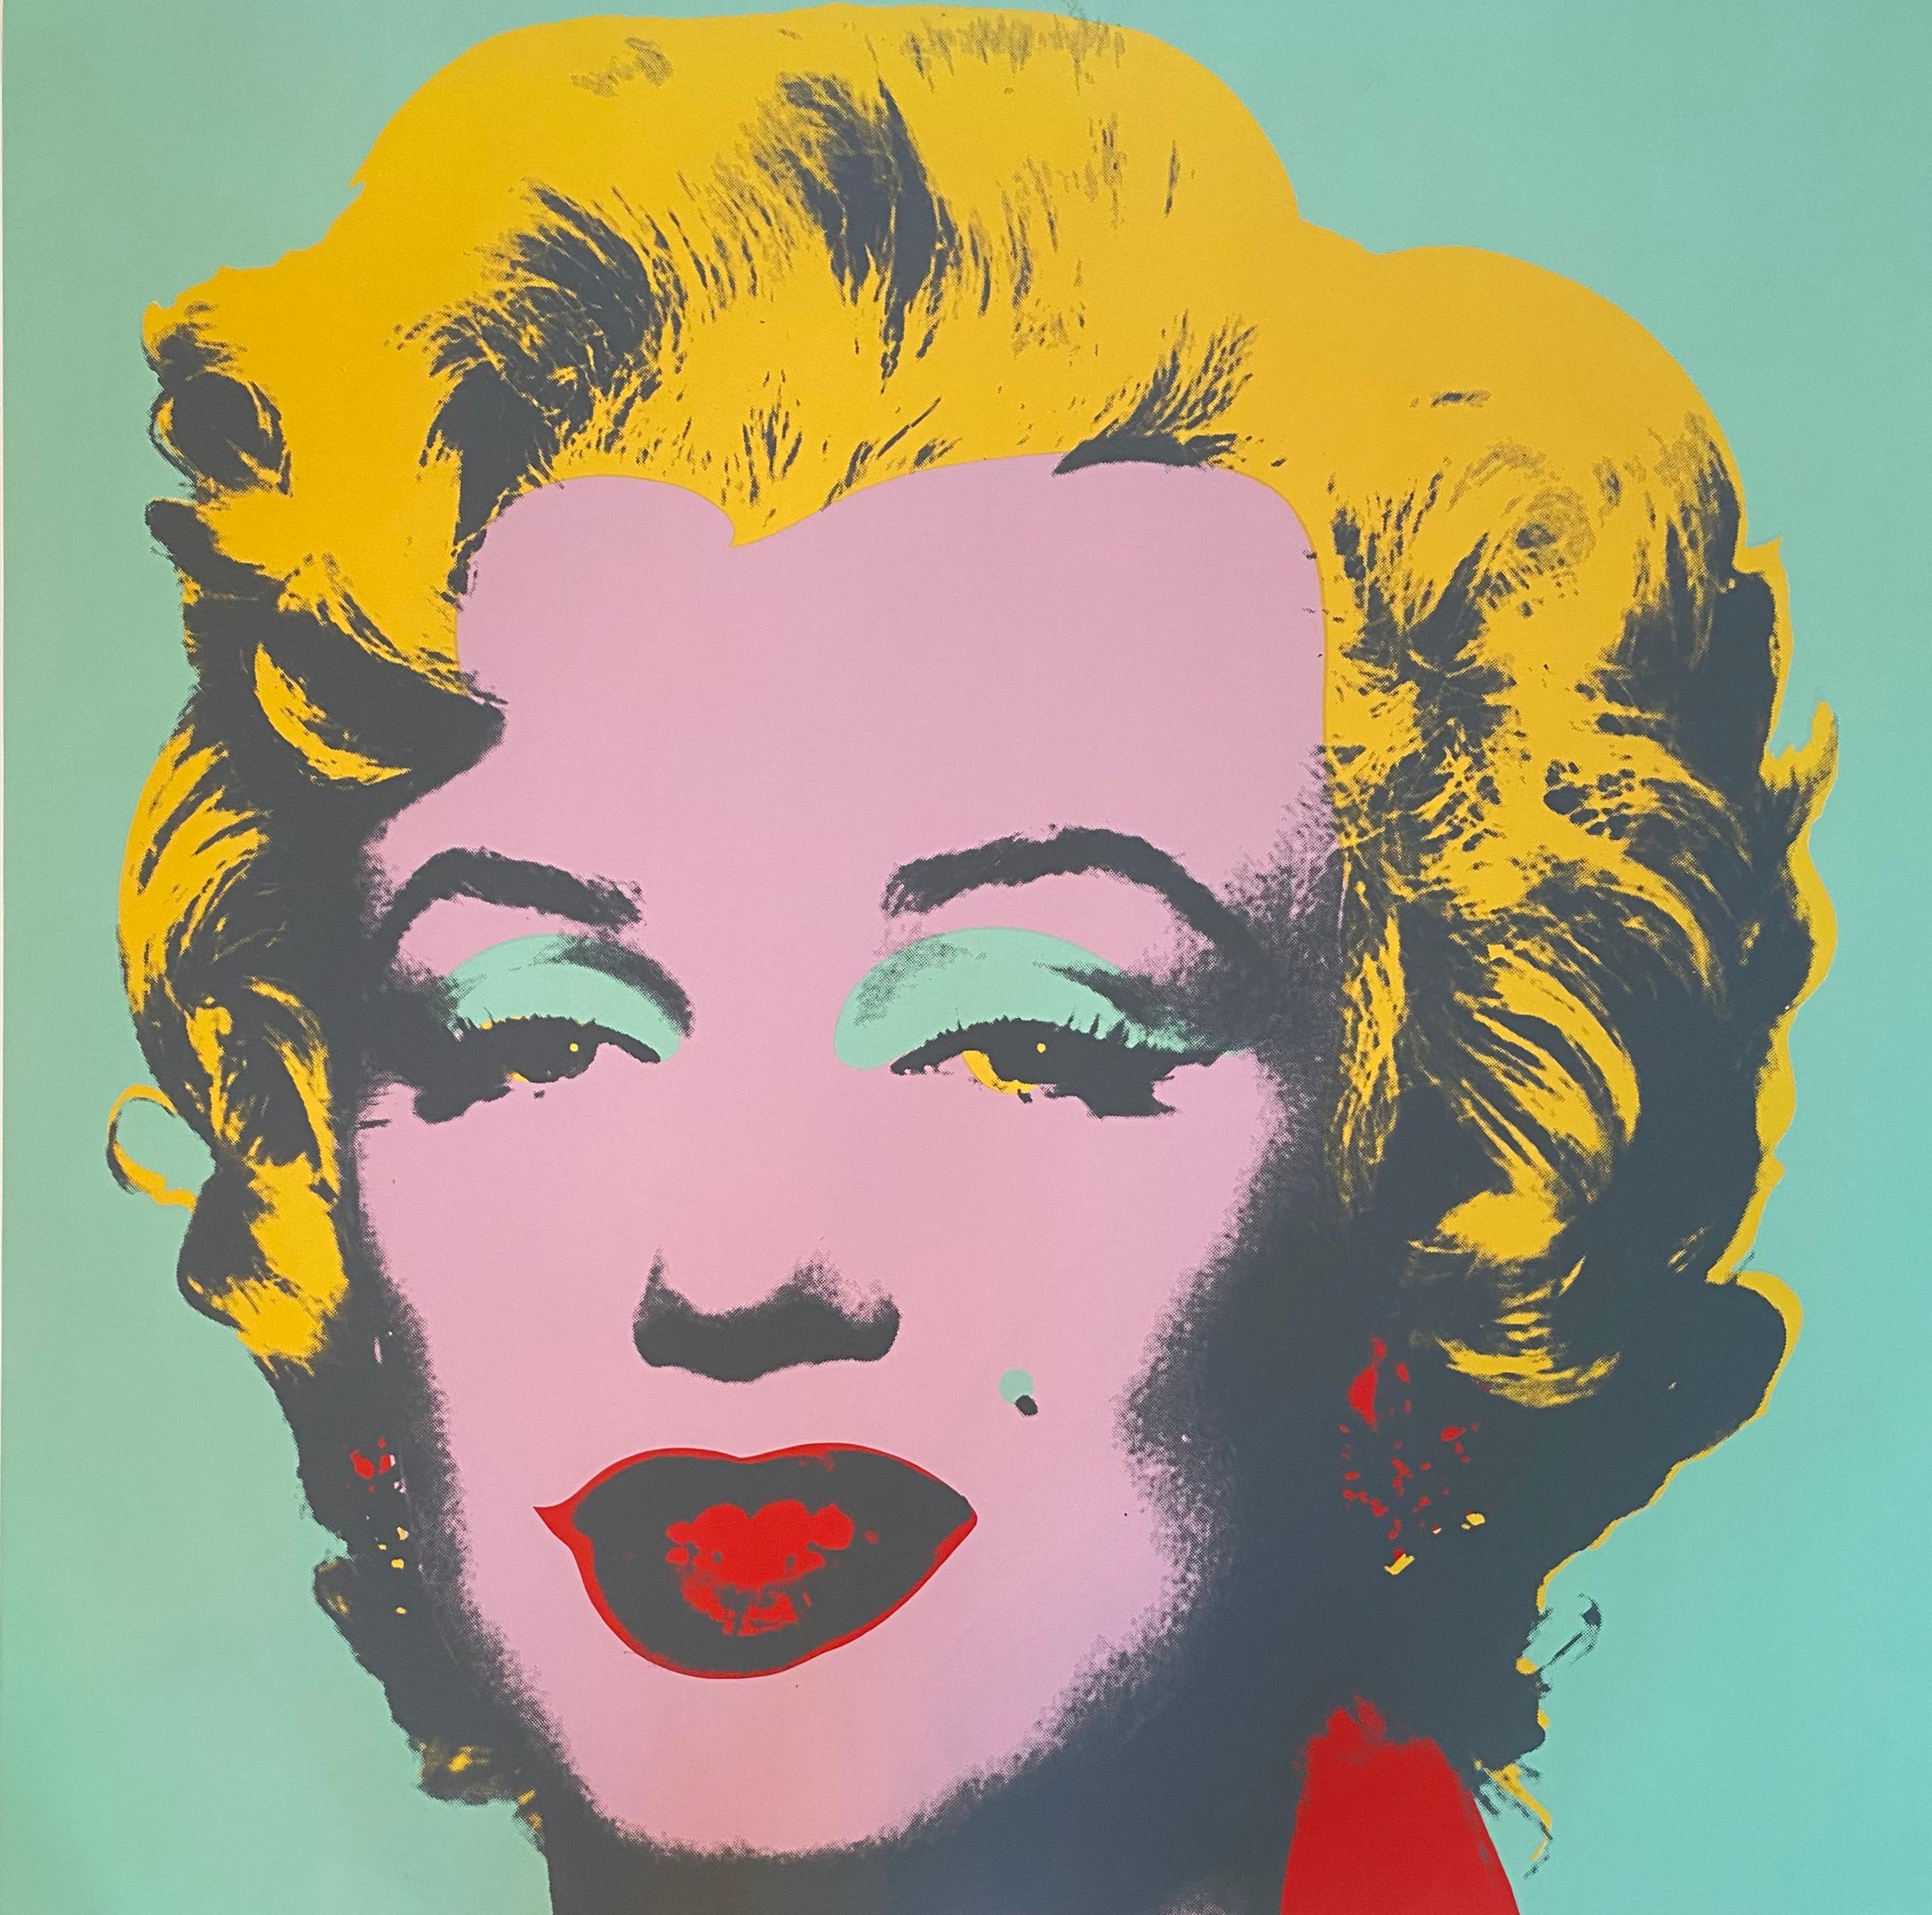 Andy Warhol Portrait Print - Marilyn Monroe (Marilyn) F&S II.23